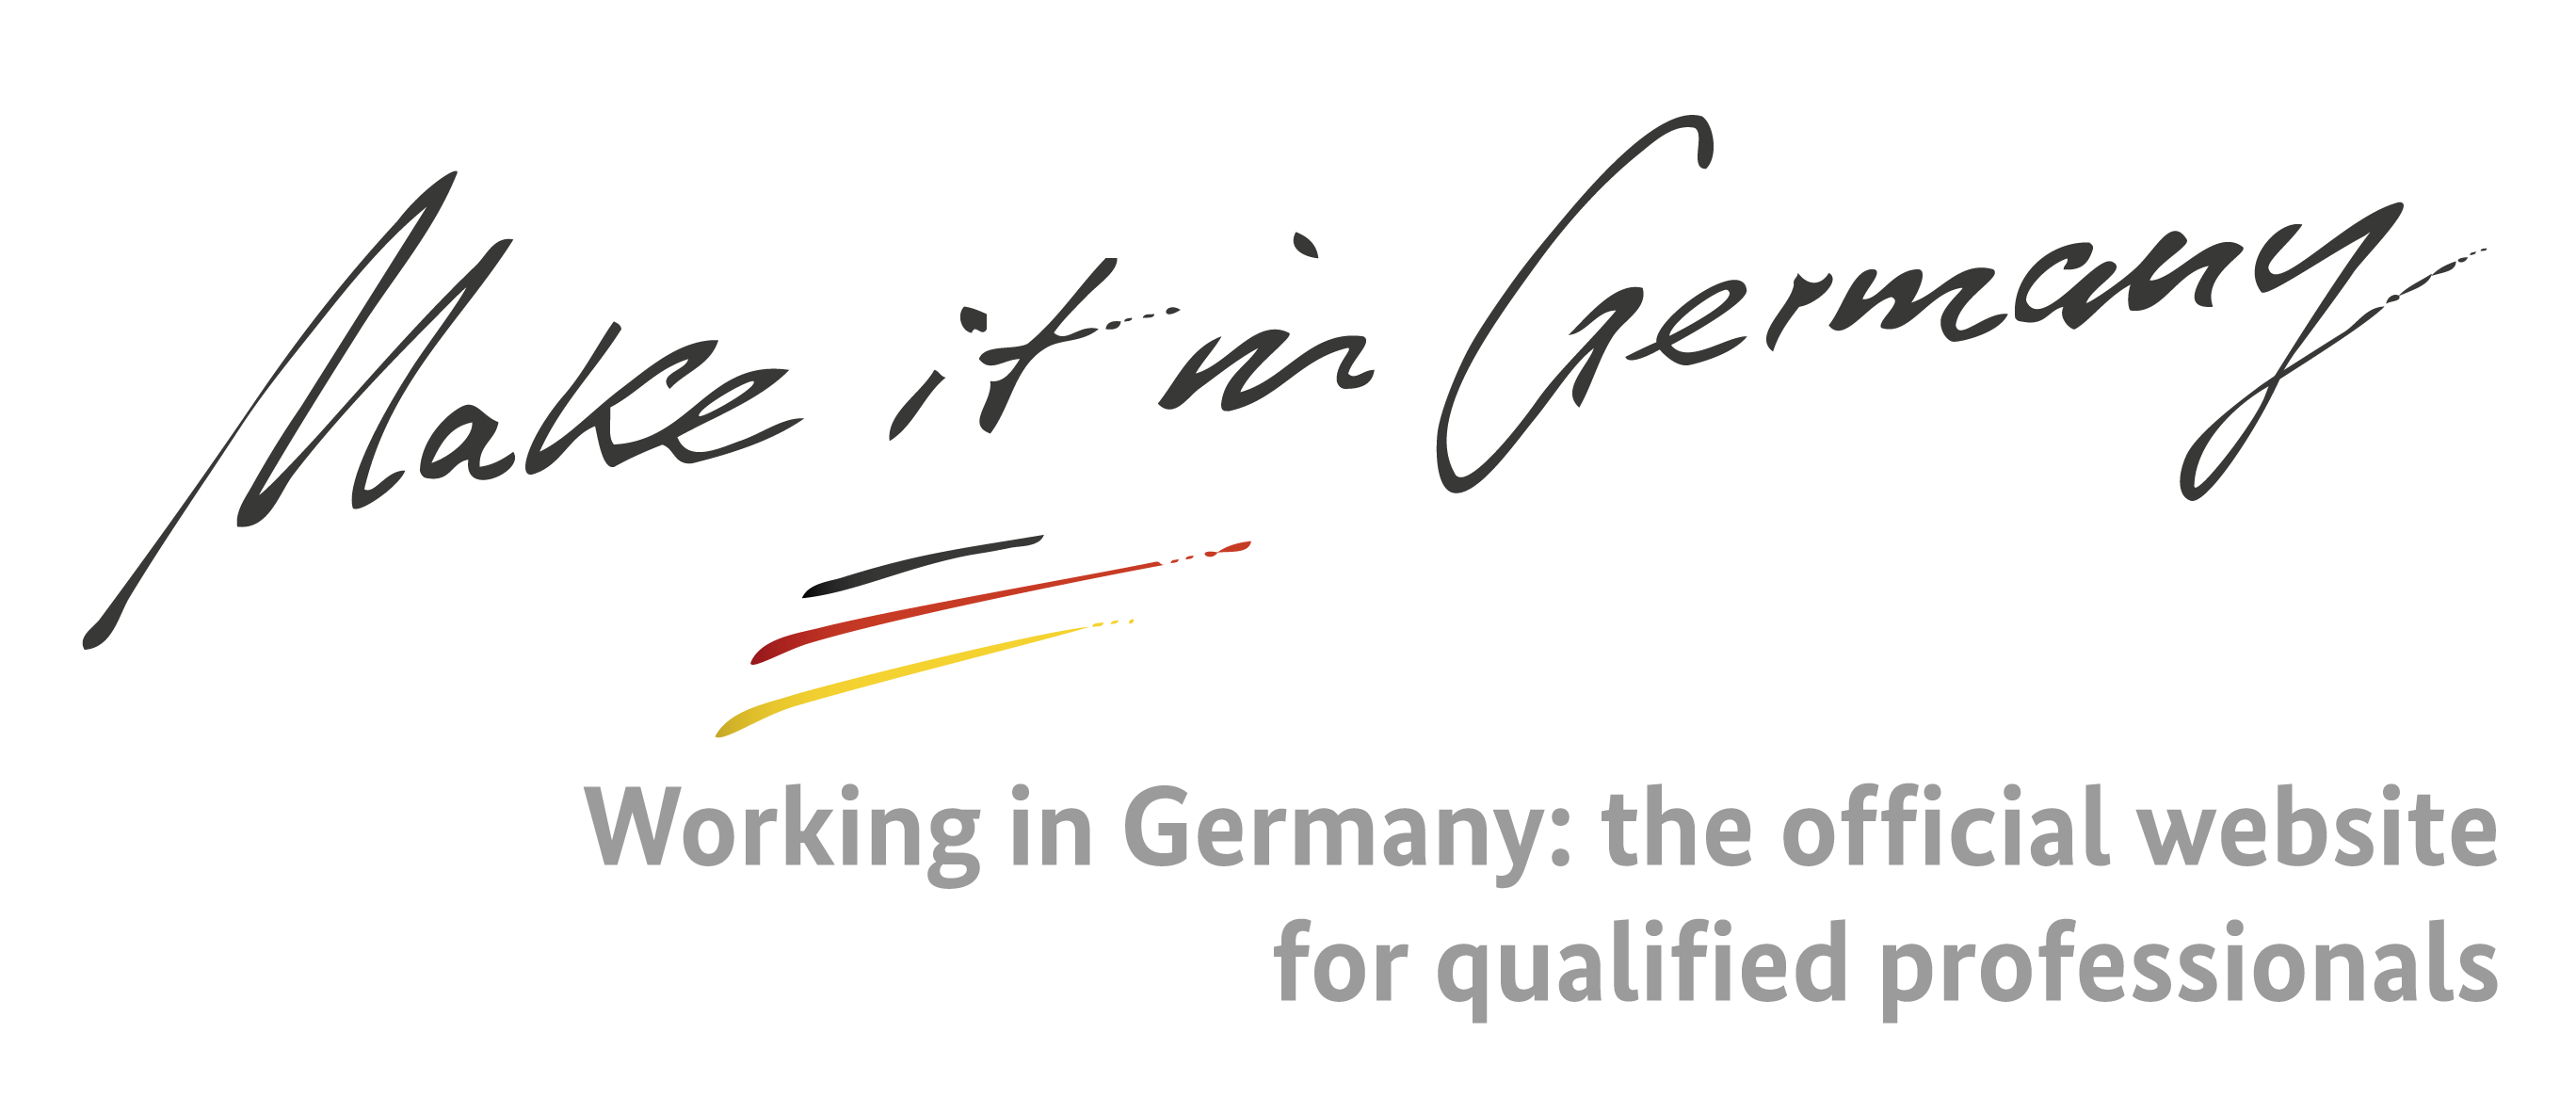 Logo Make it in Germany